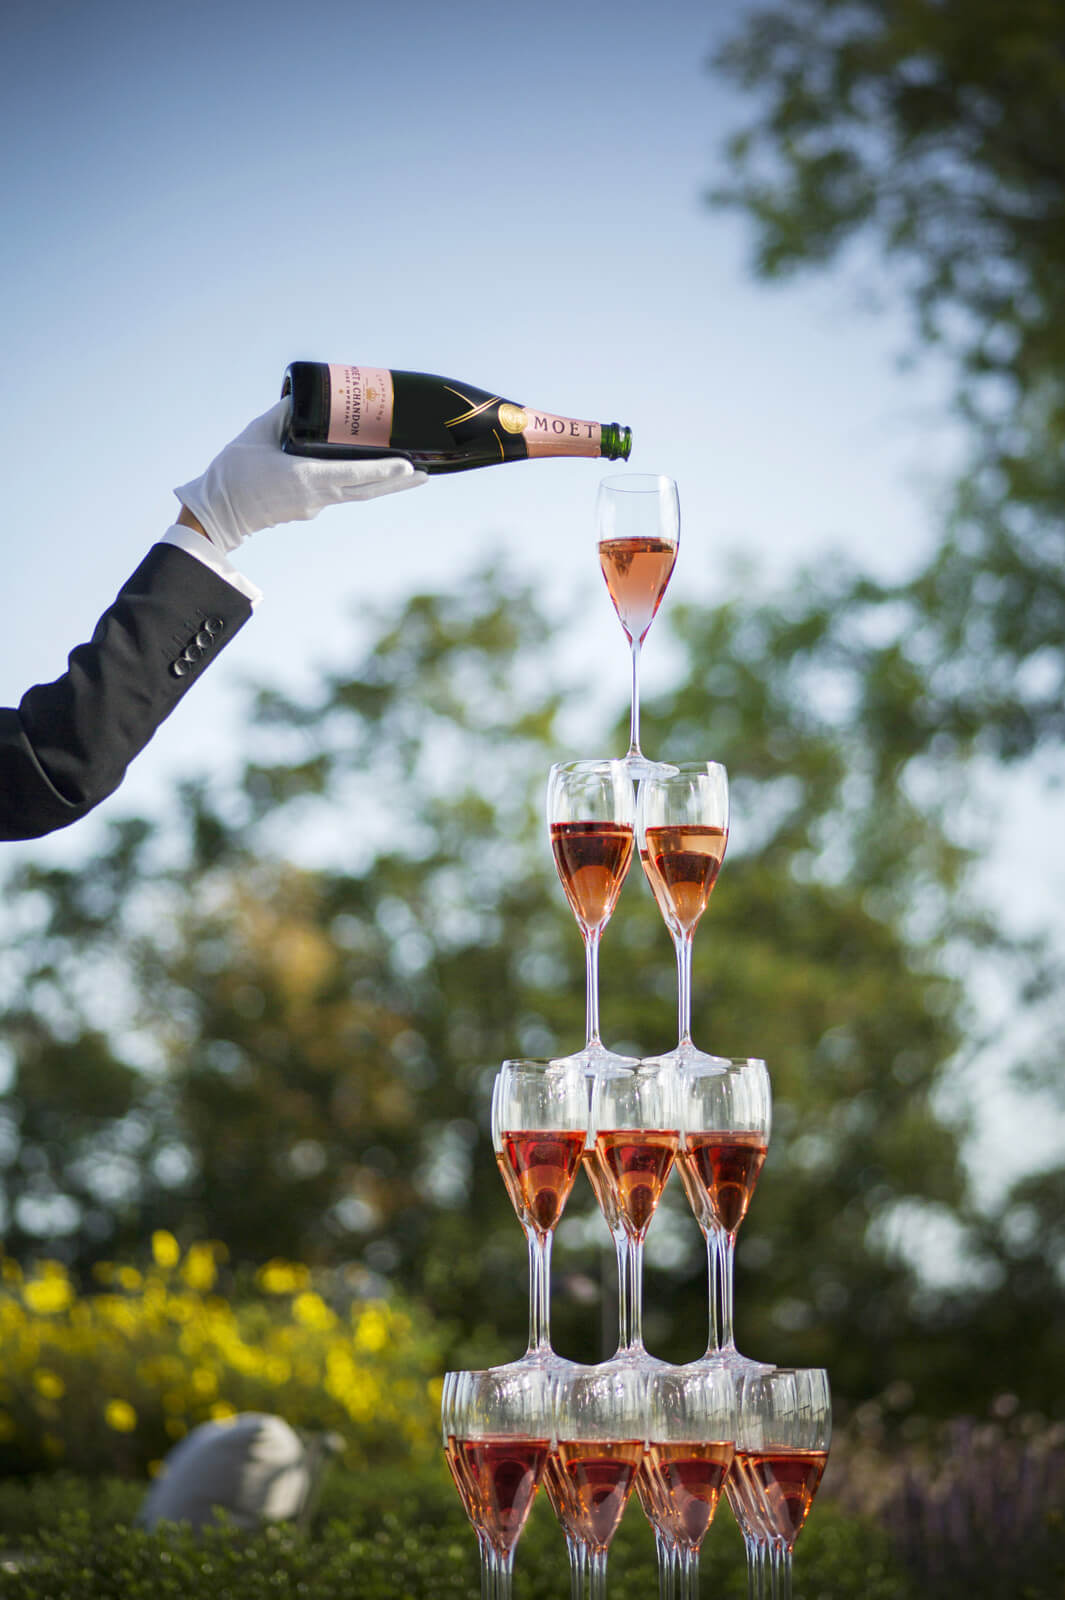 Guidelines for storing Champagne Moët & Chandon